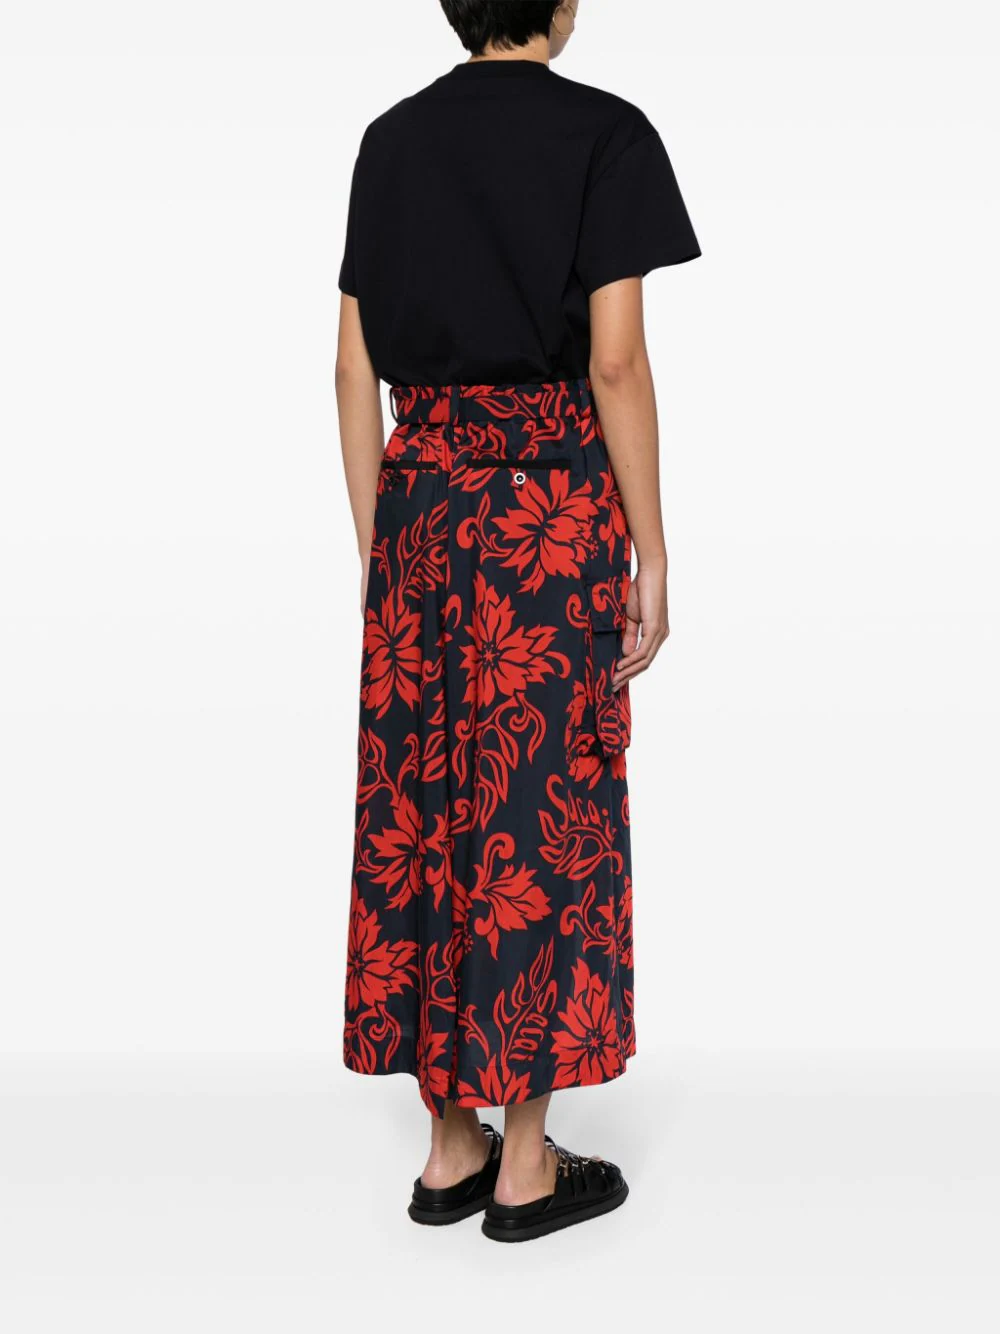 sacai-Floral-Print-Cotton-Jersey-Dress-Red-4